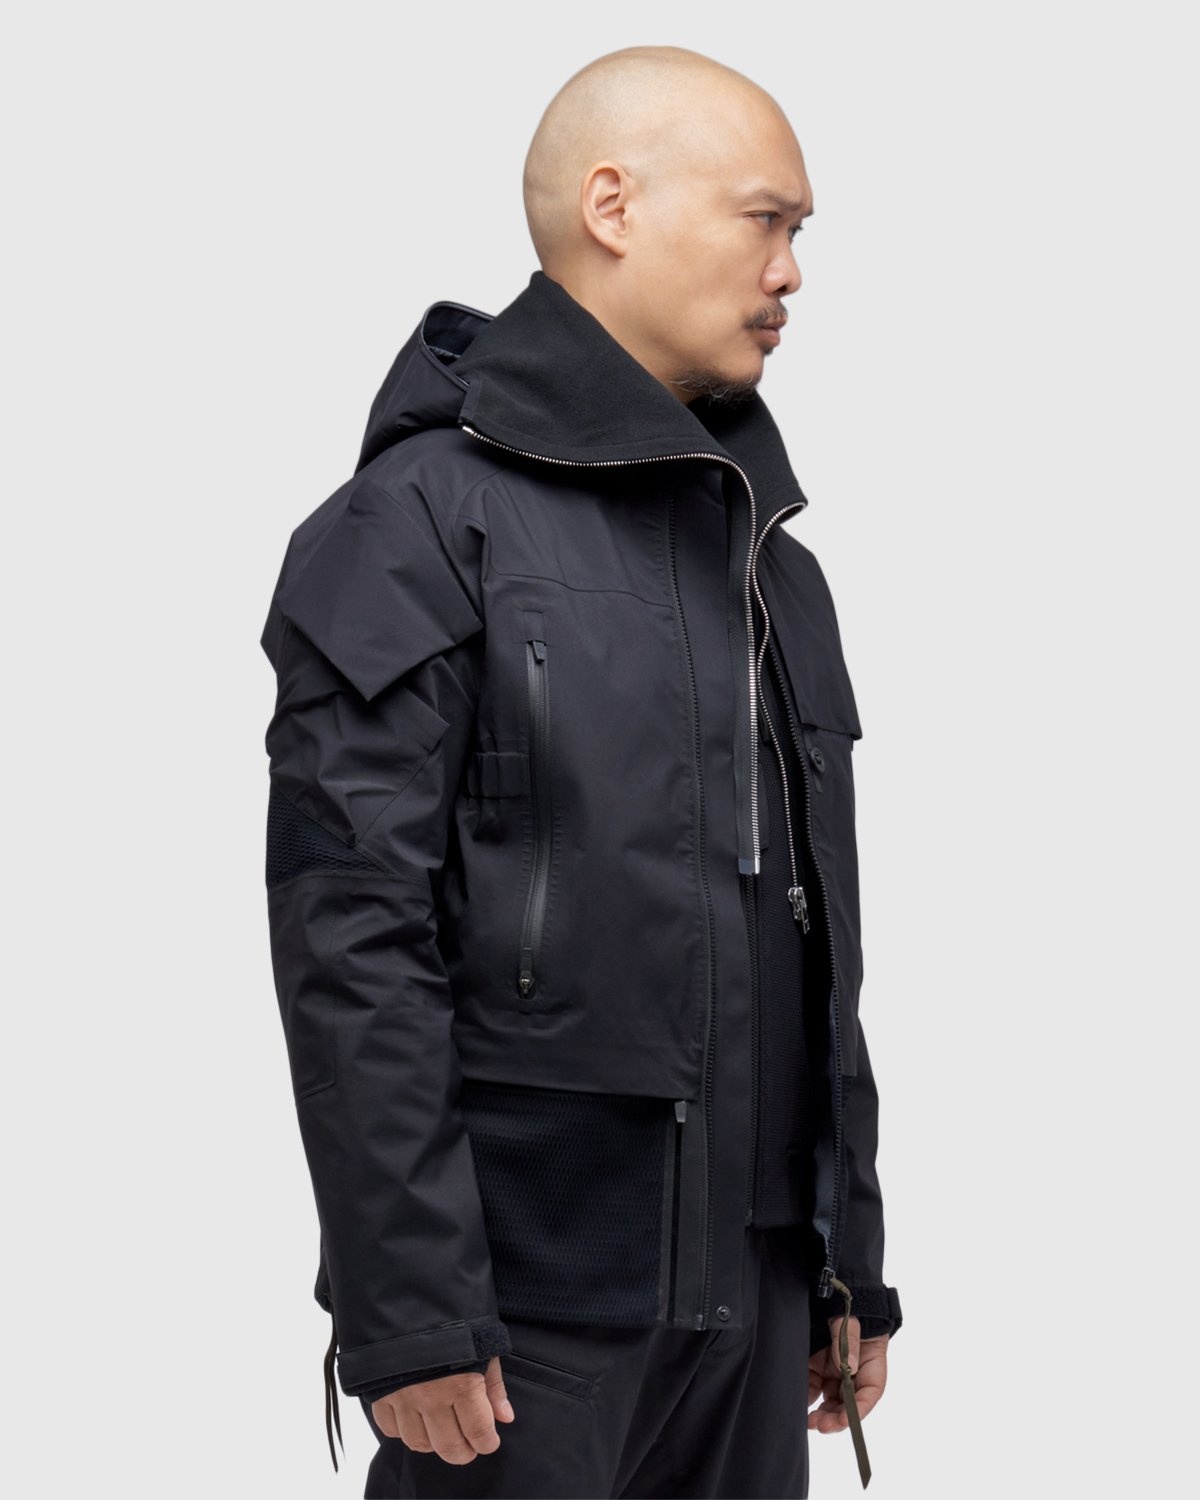 ACRONYM – J16-GT Jacket Black - Outerwear - Black - Image 7